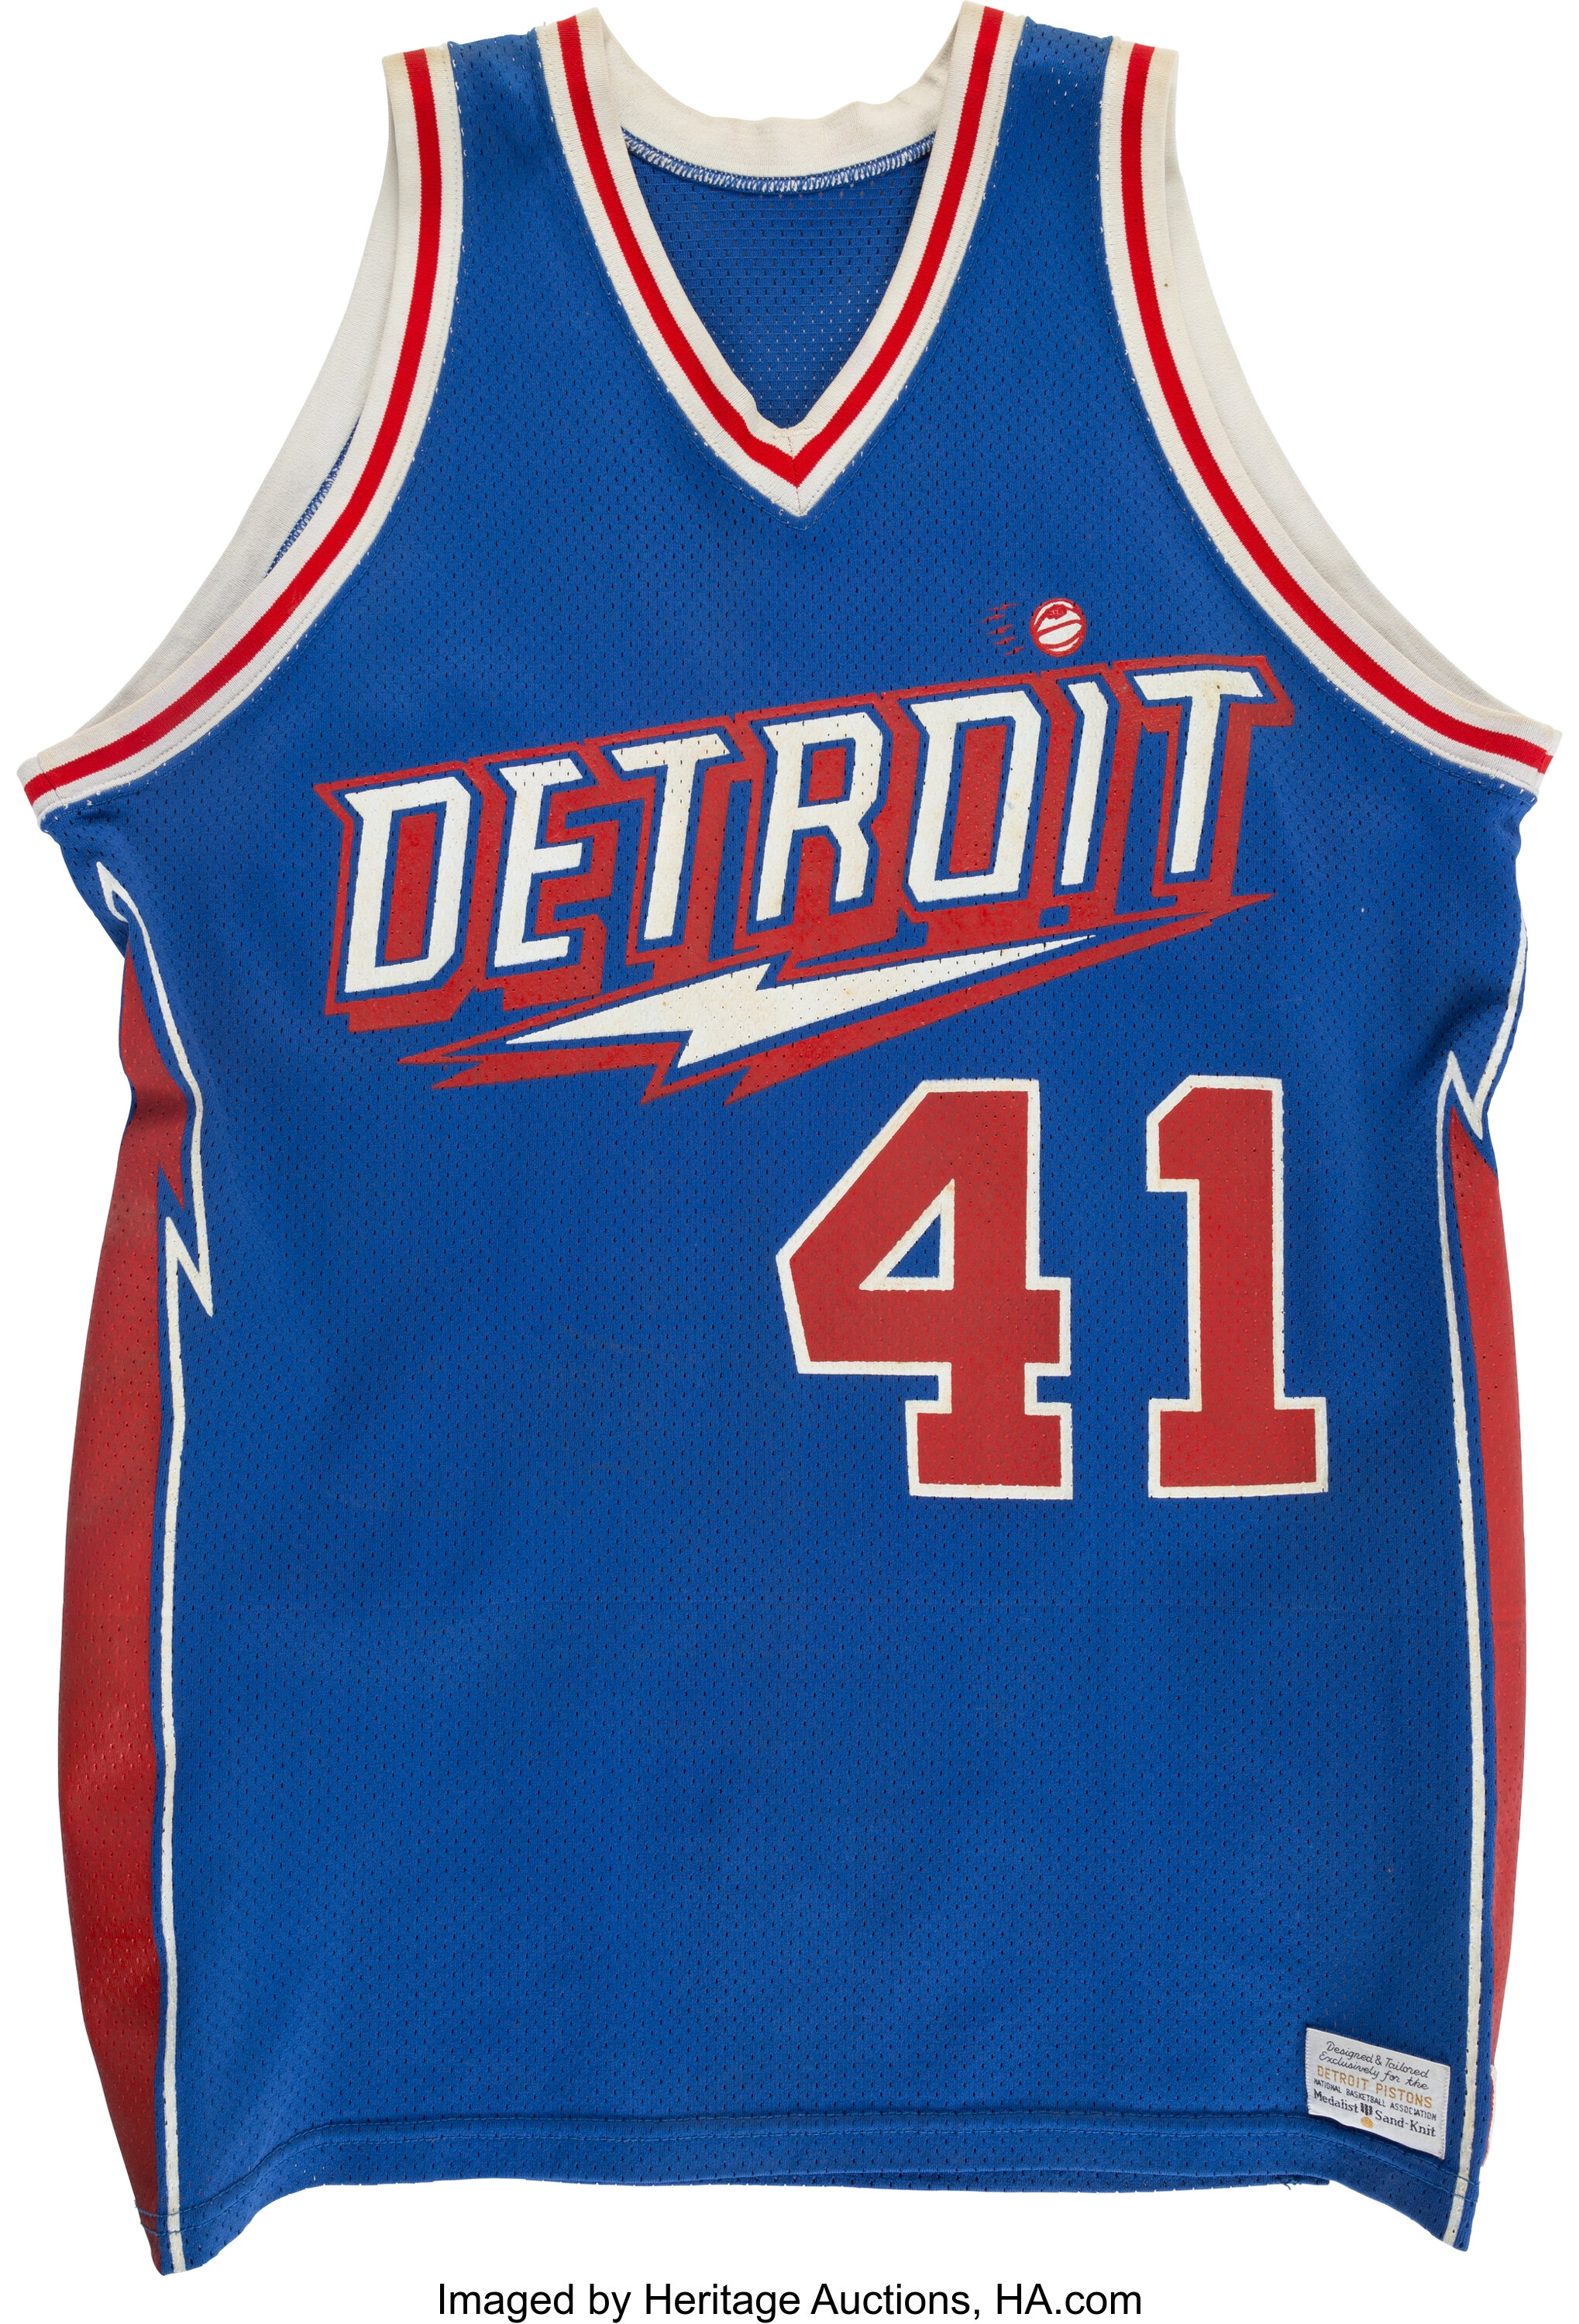 Detroit Pistons Primary White Uniform - National Basketball